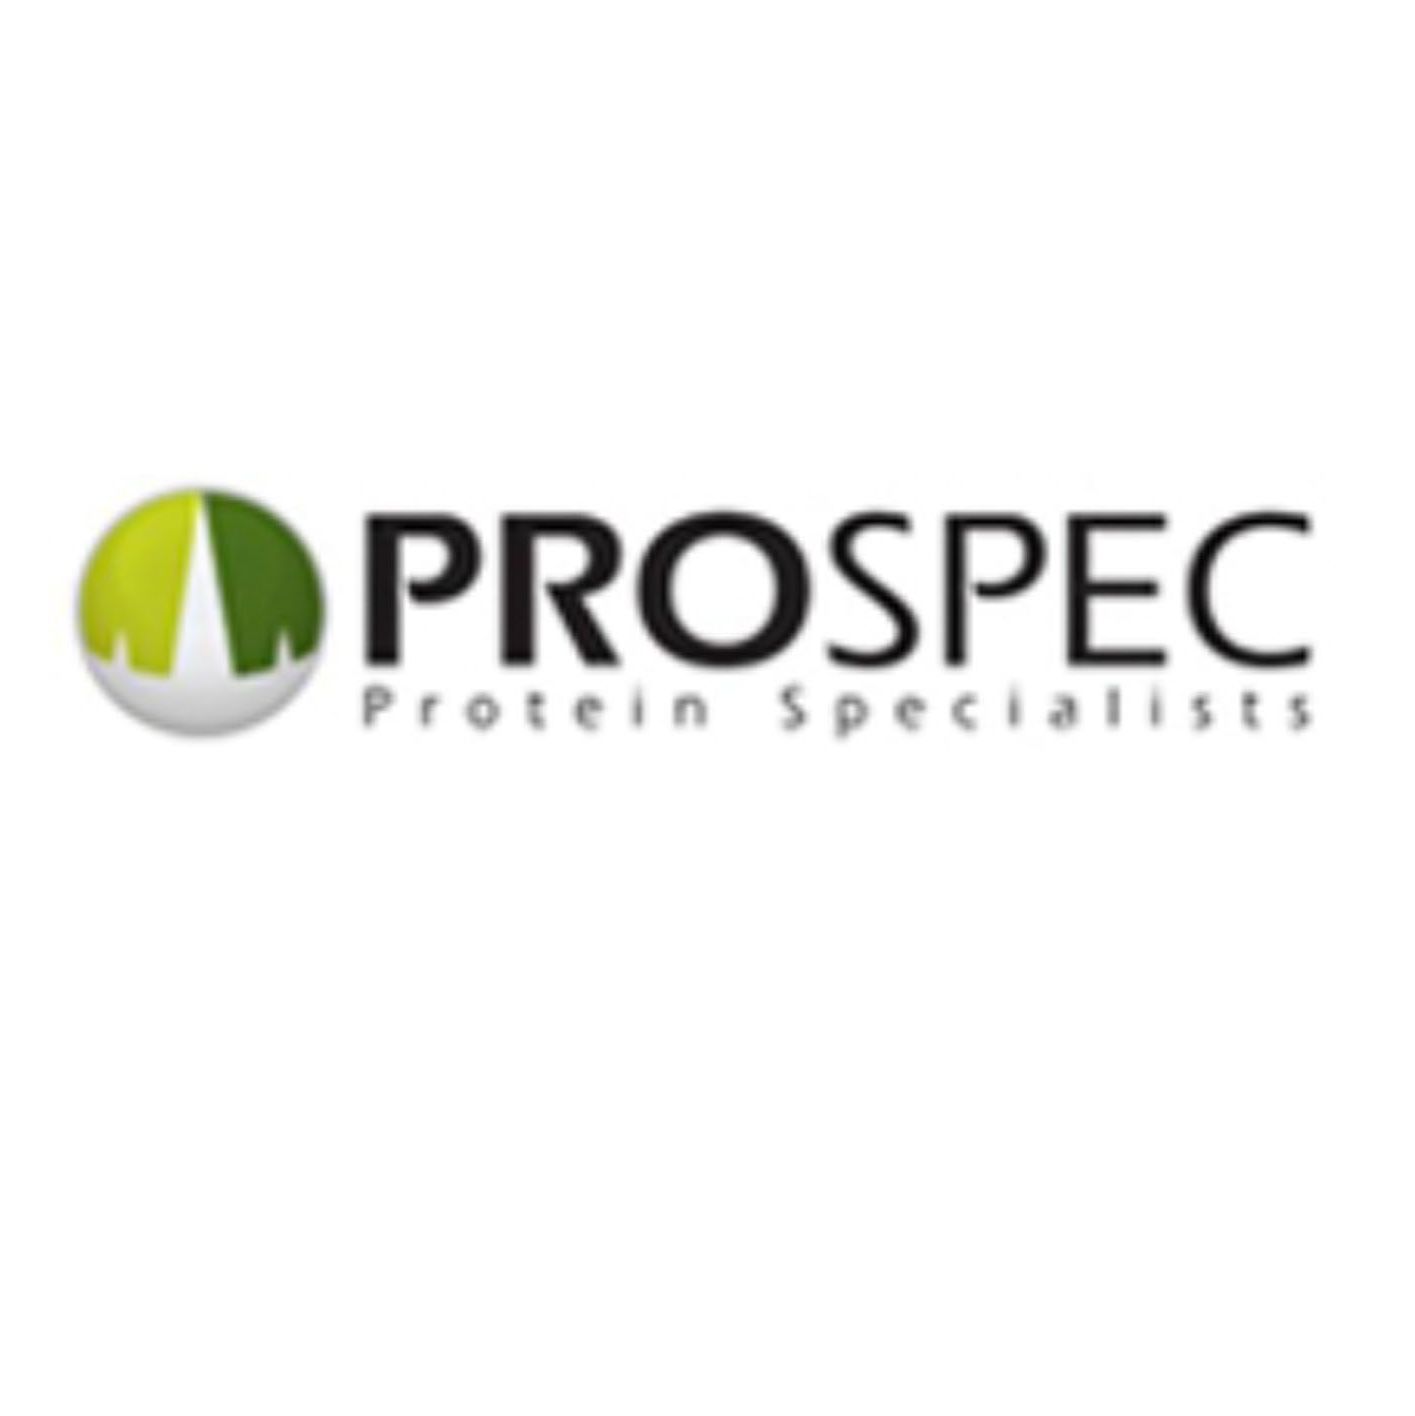 ProSpec-Tany  神经科学、蛋白酶及干细胞研究、